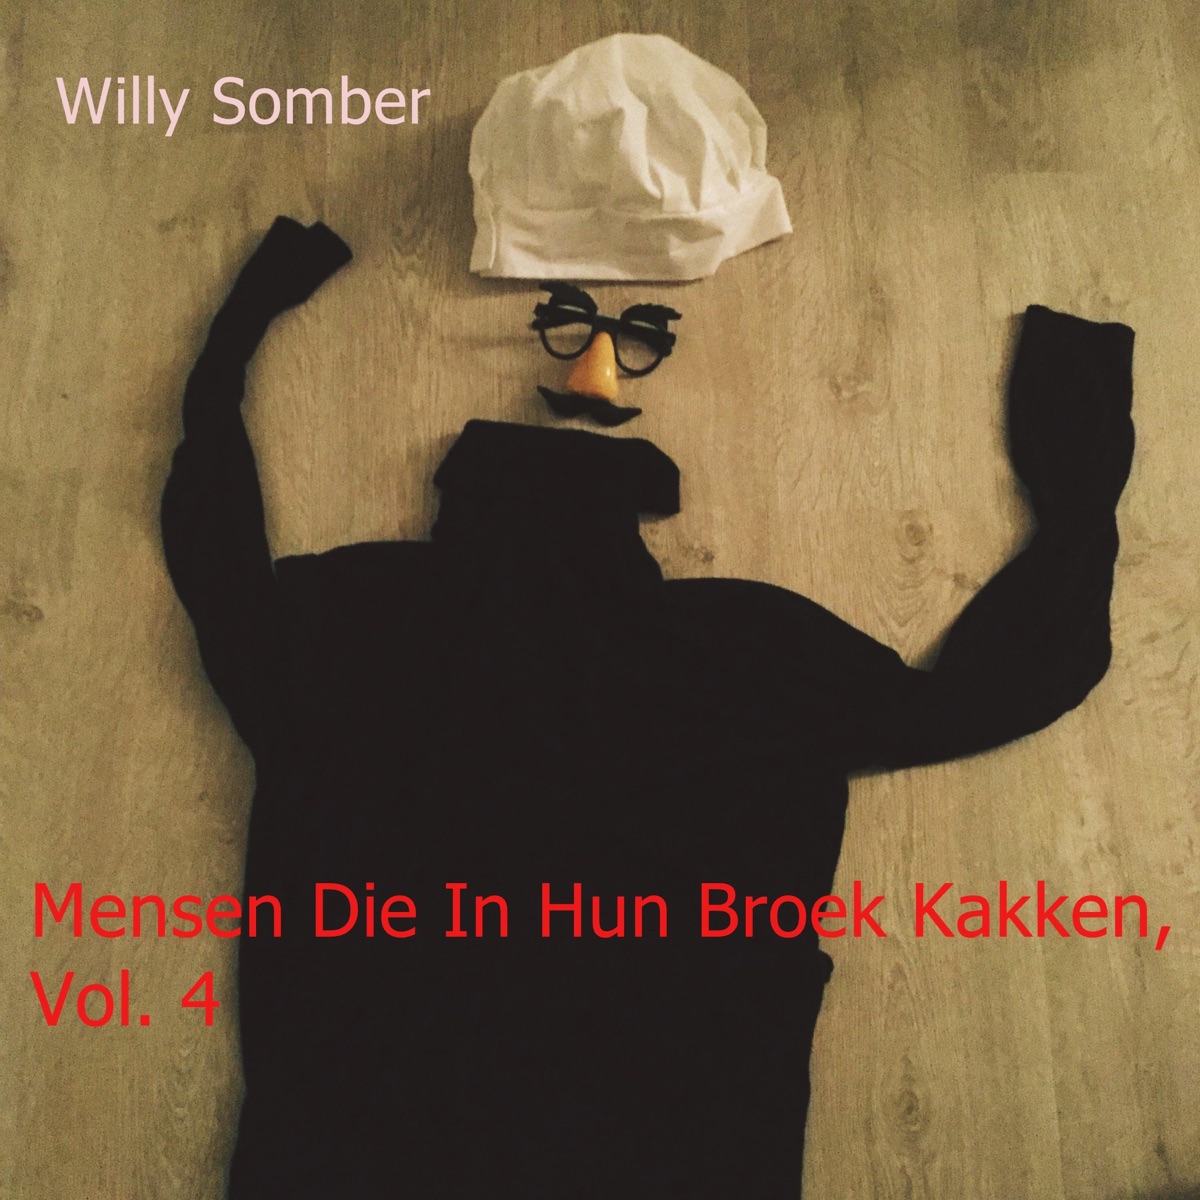 Mensen Die in Hun Broek Kakken by Willy Somber on Apple Music